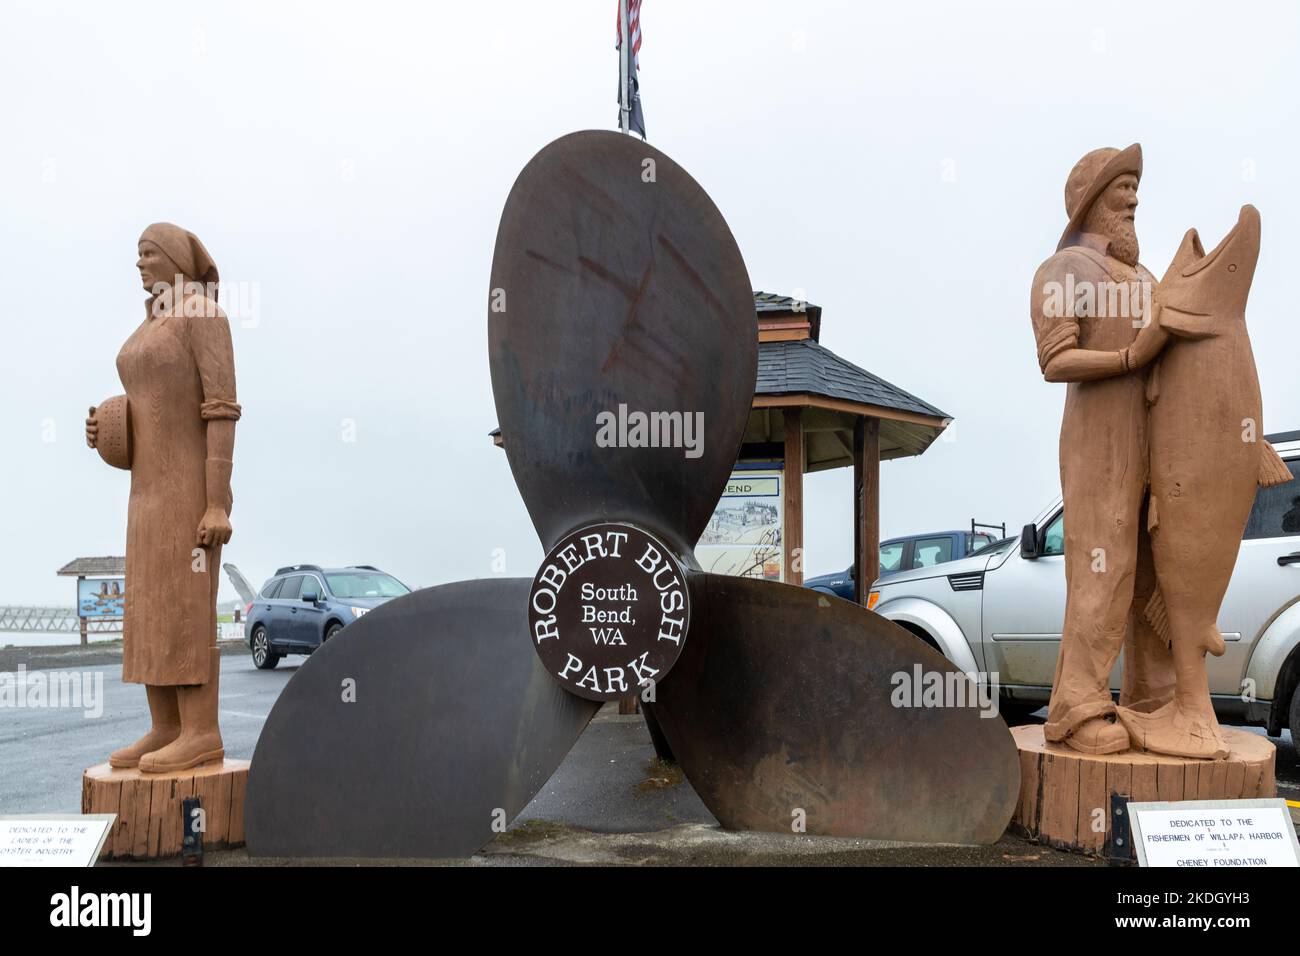 South Bend, WA. USA - 10-2022: Fishing Boat Propeller and Wood Carvings at Entrance to Robert Bush Park Stock Photo